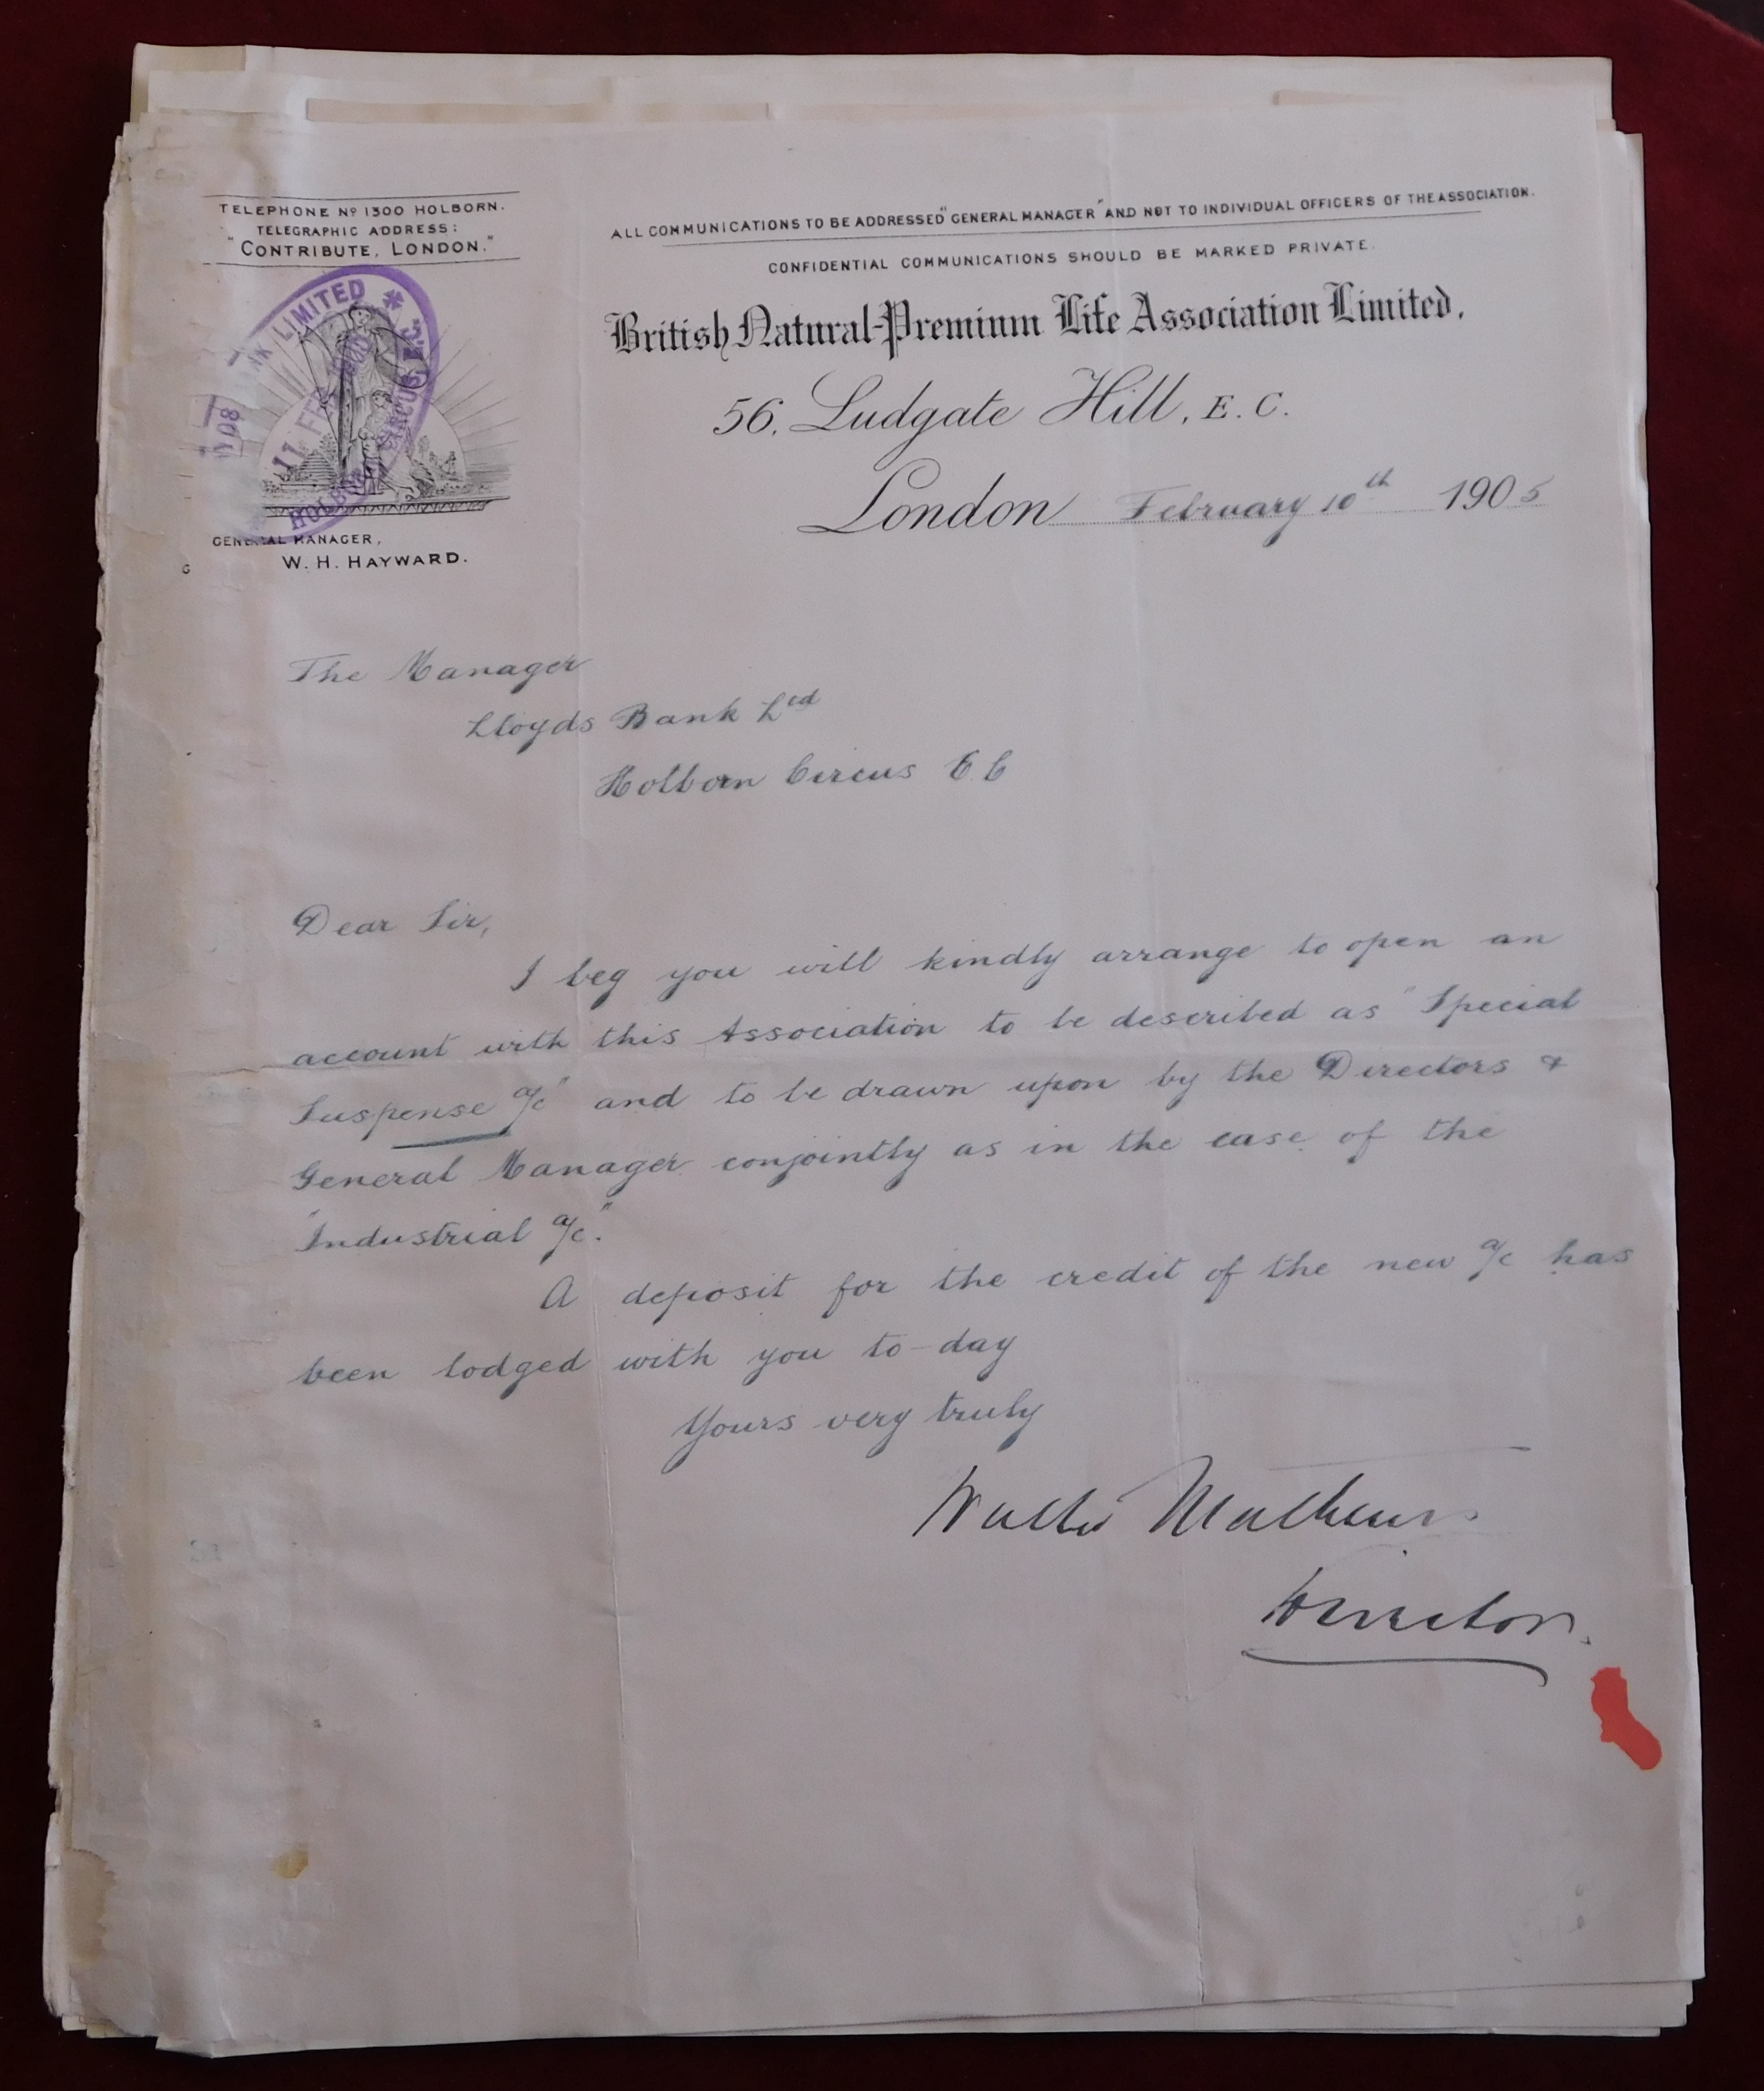 Insurance - 1901 British Natural Premium Life Insurance Association Limited. 1901 letter-headed